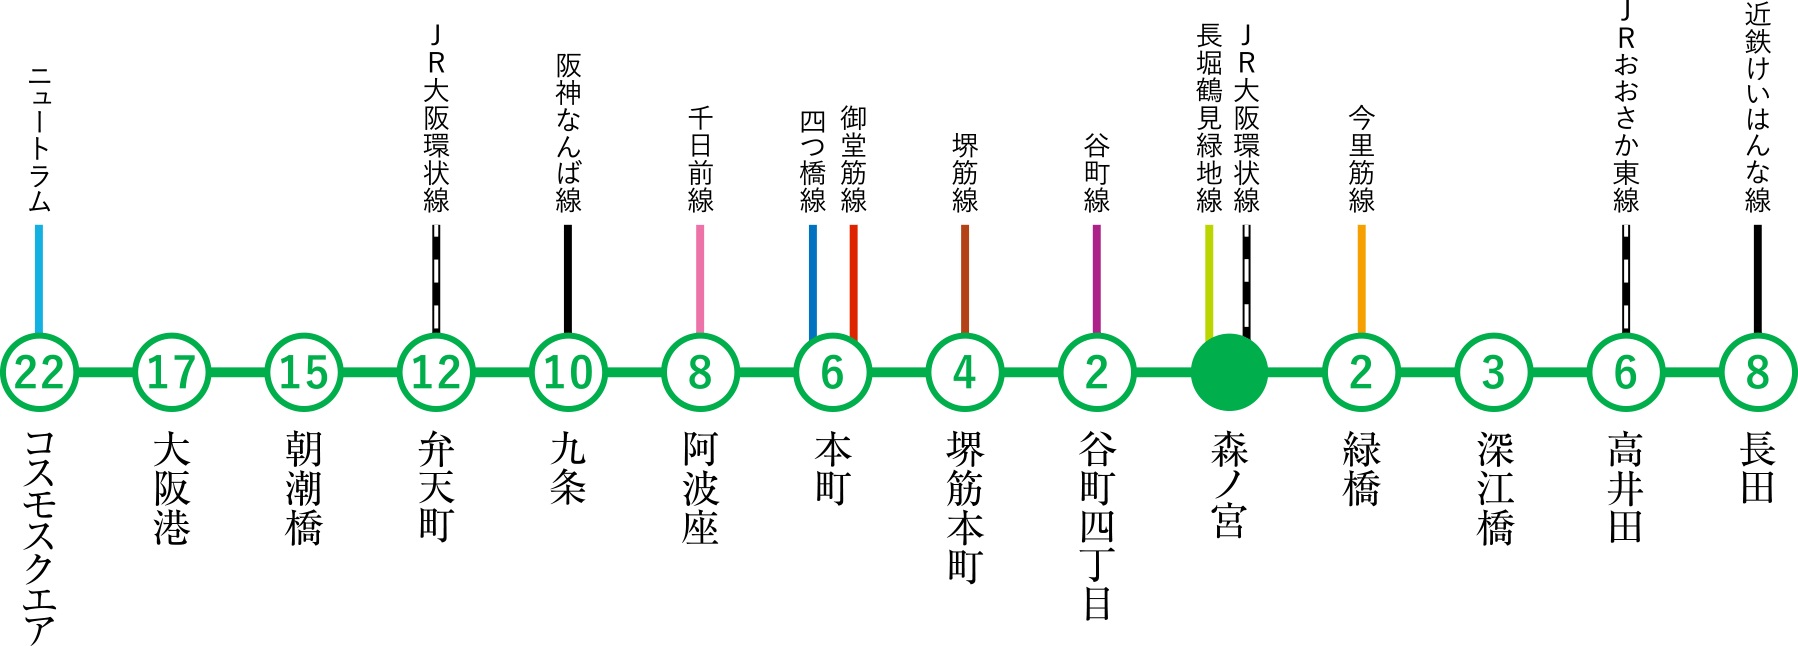 Osaka Metro全線に乗り換え可能な唯一のライン、それが中央線。